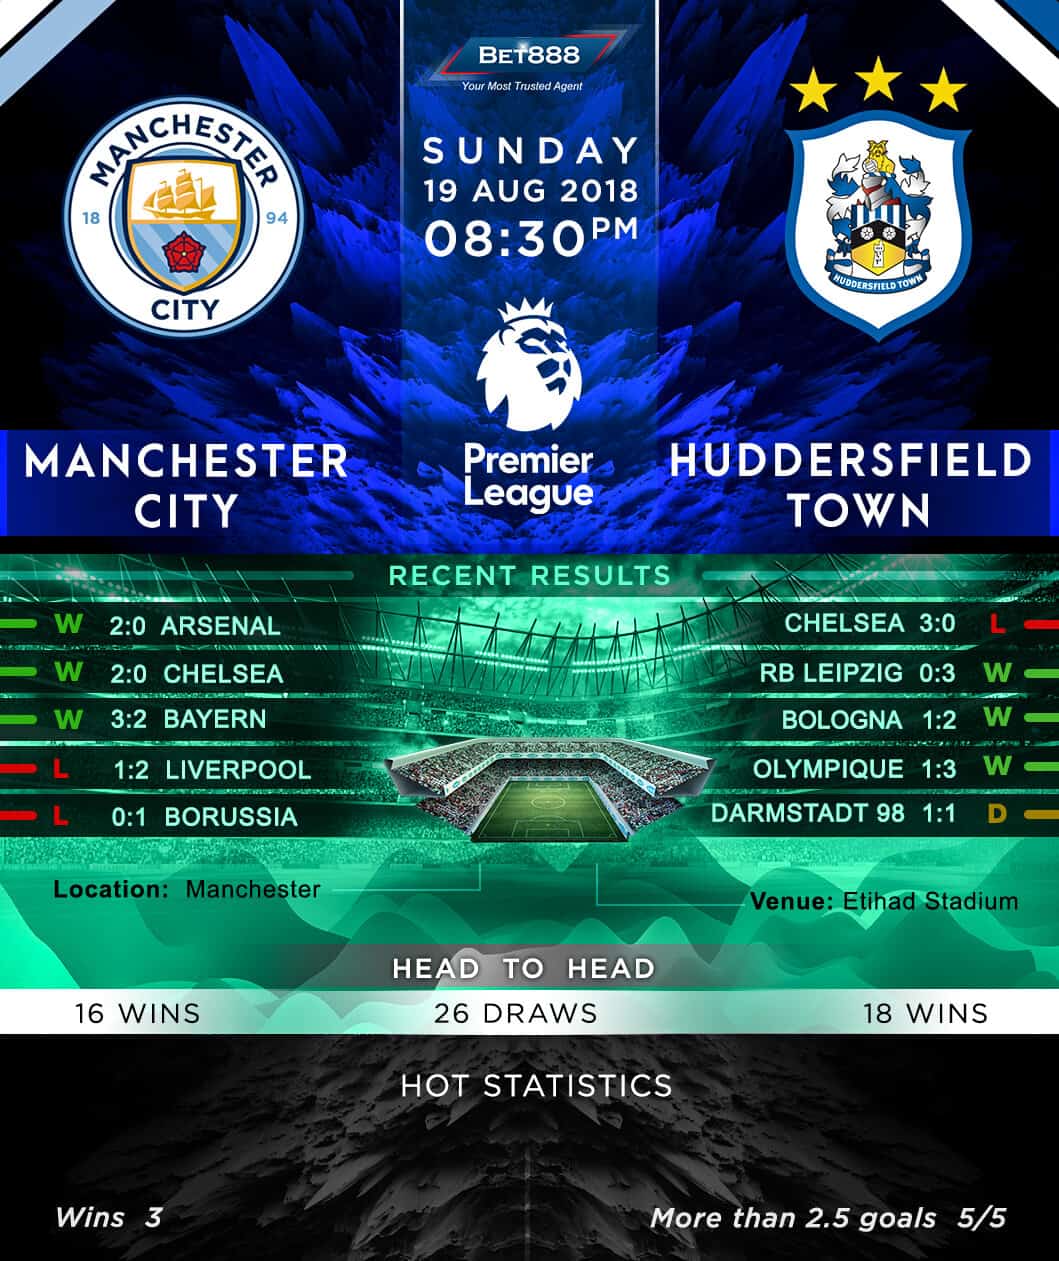 Manchester City vs Hudderfield Town 19/08/18